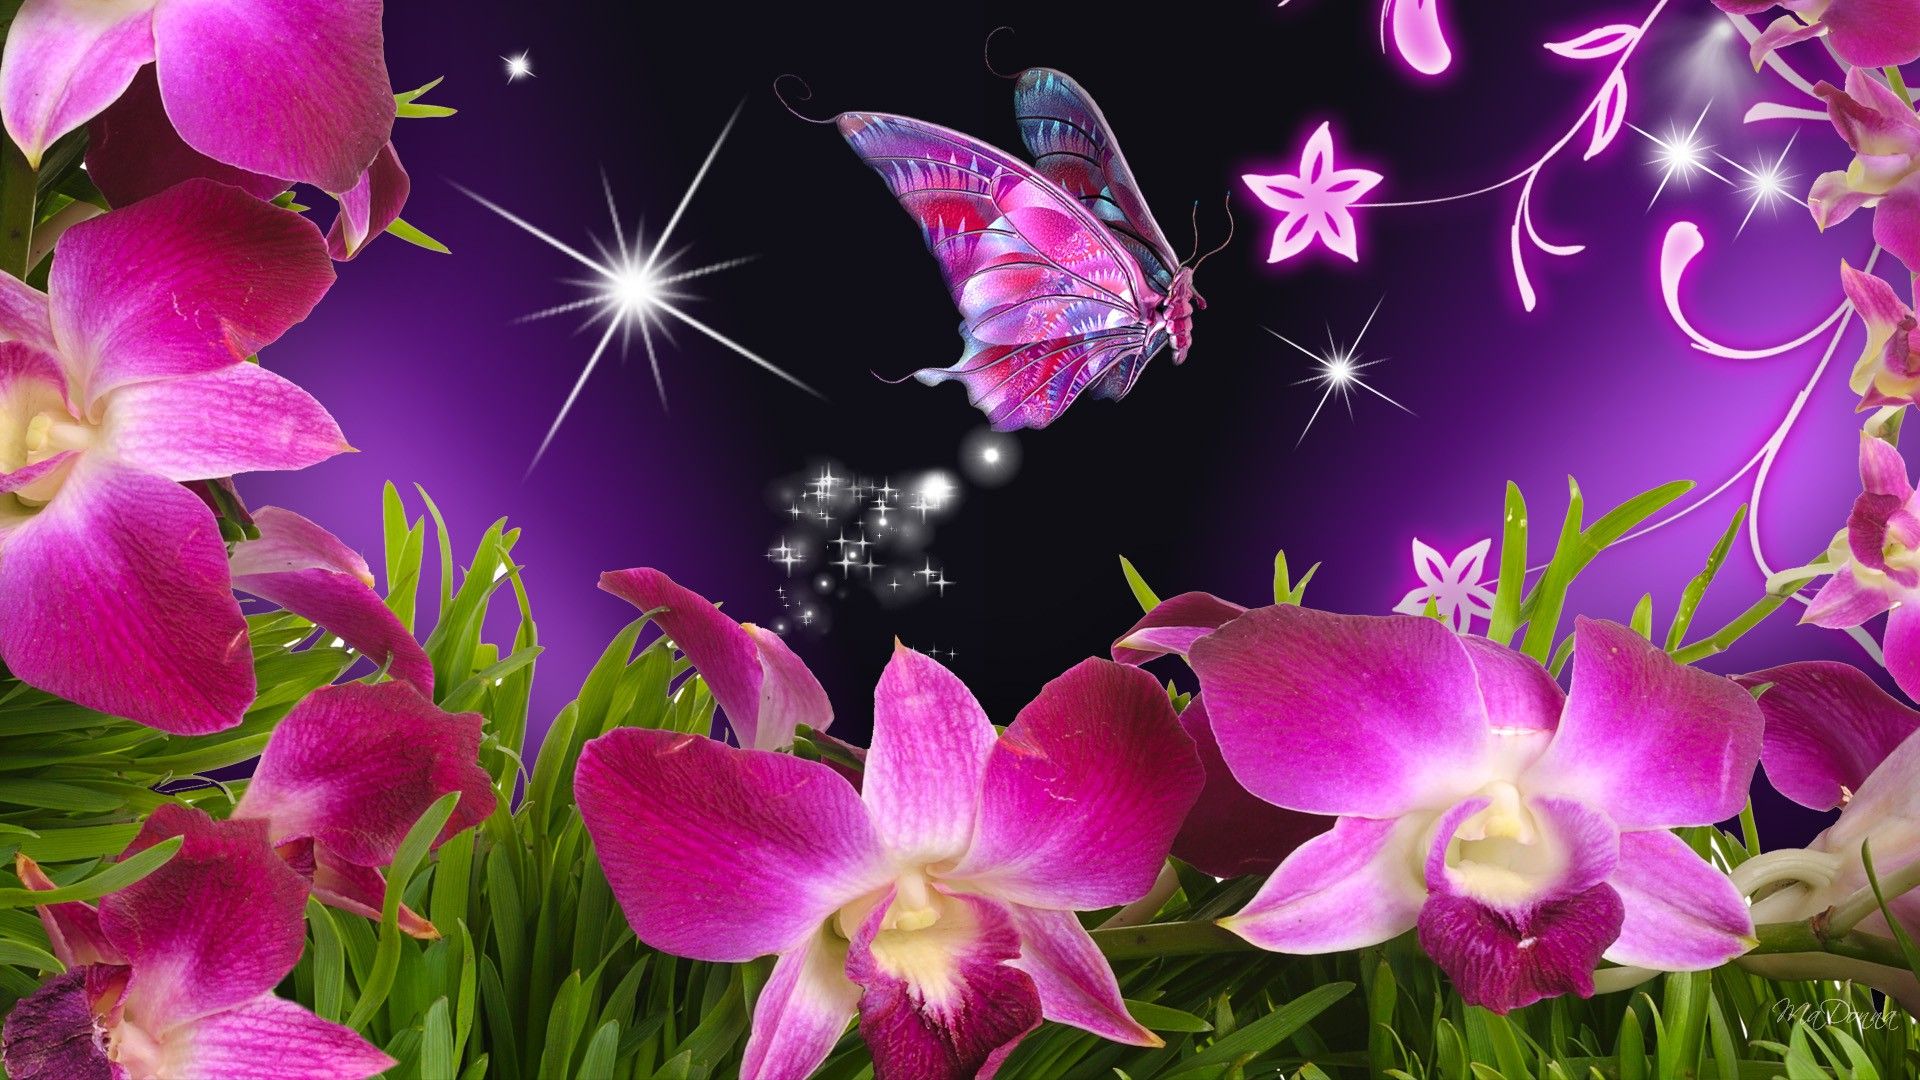 butterflies and flowers | Butterfly Flowers Orchid Purple Stars ...